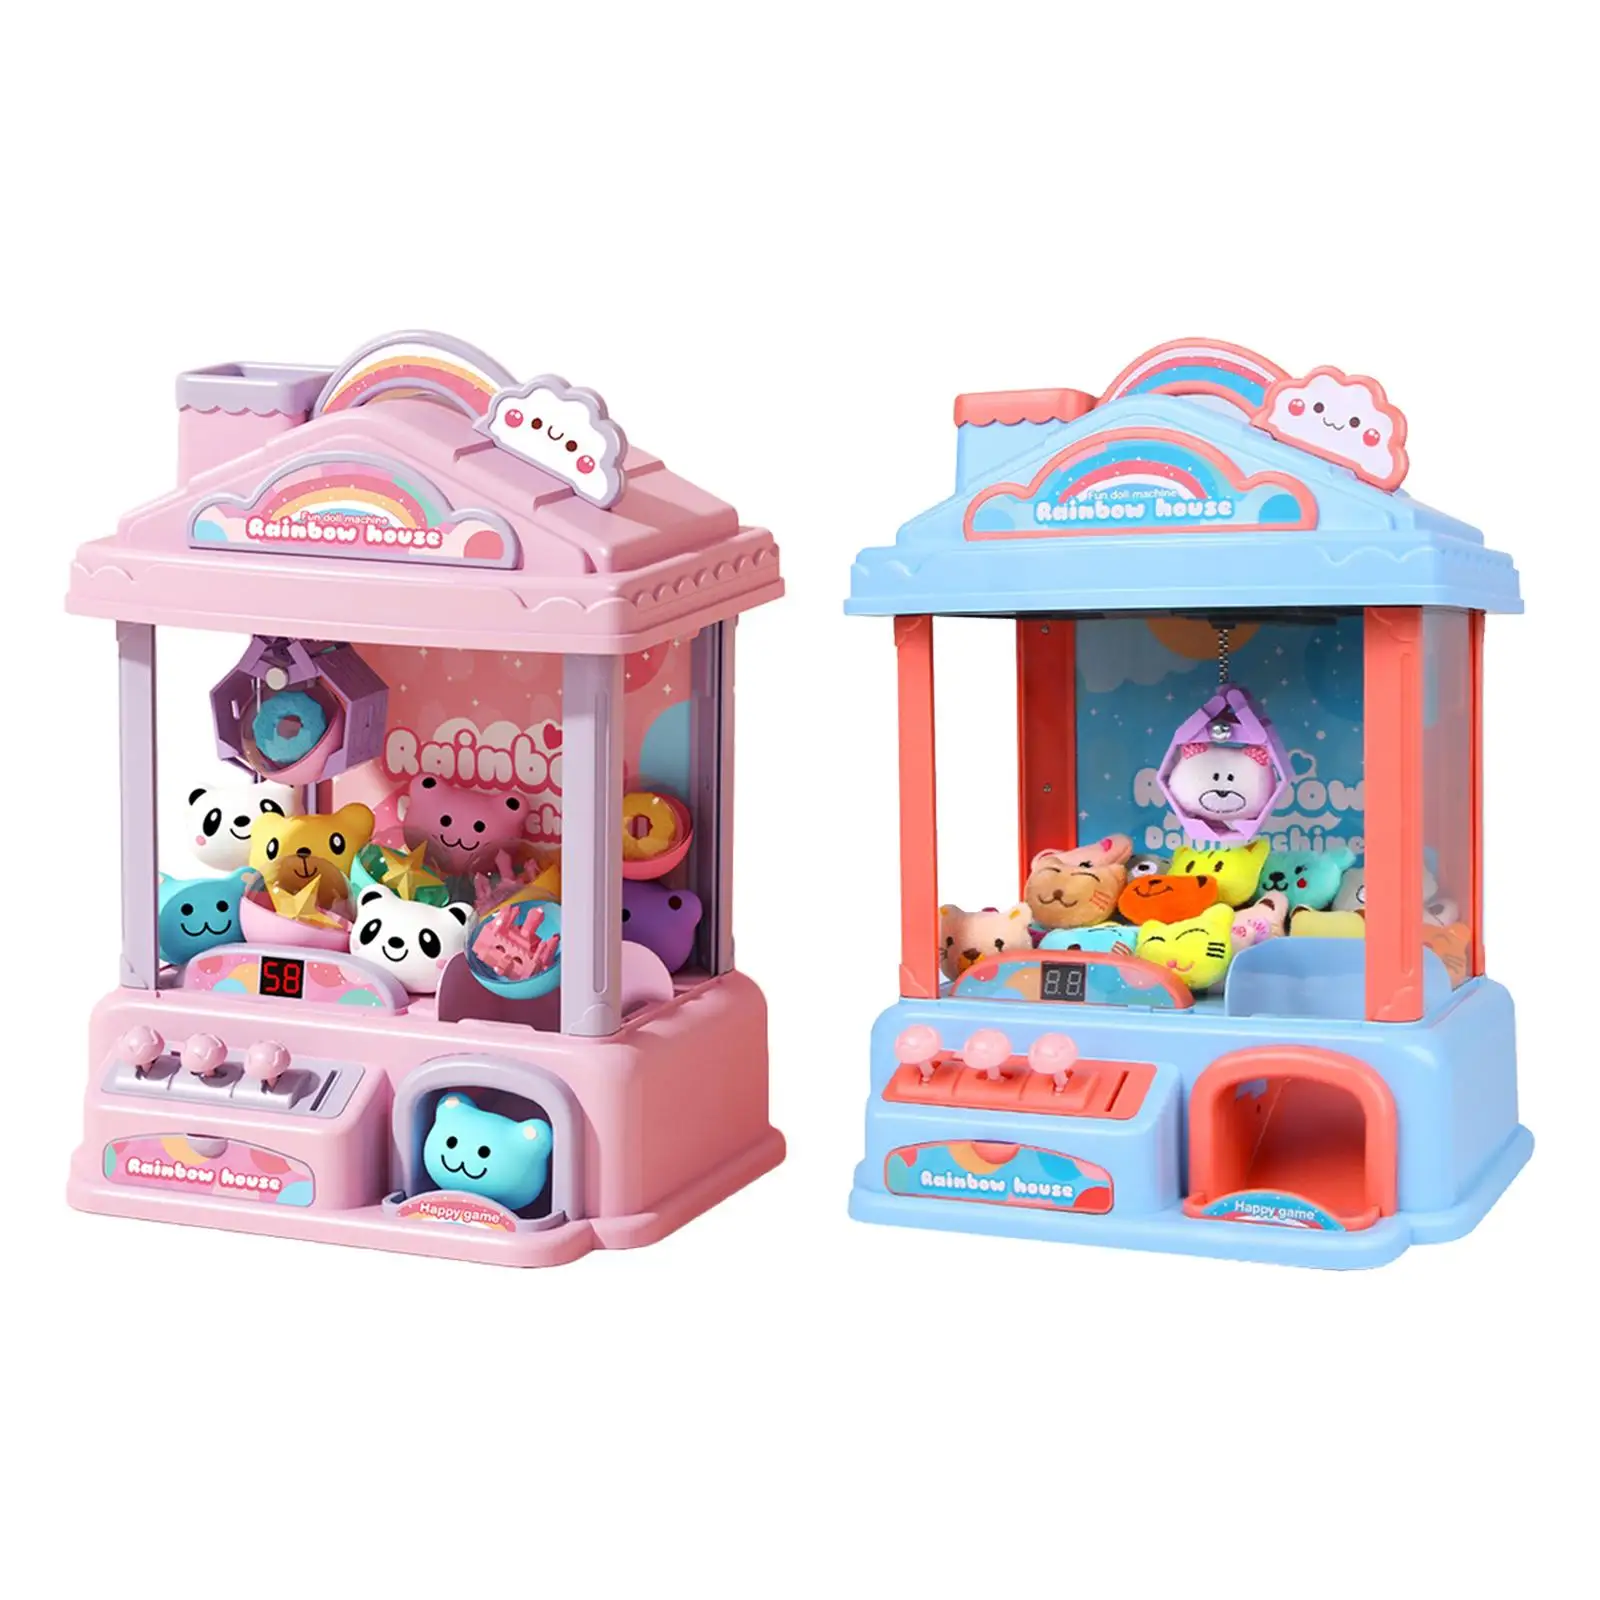 Mini Claw Machine Candy Dispenser Toys Electronic Small Toys Mini Vending Machine with 20 Mini Plush Animals for Boys Girls Kid